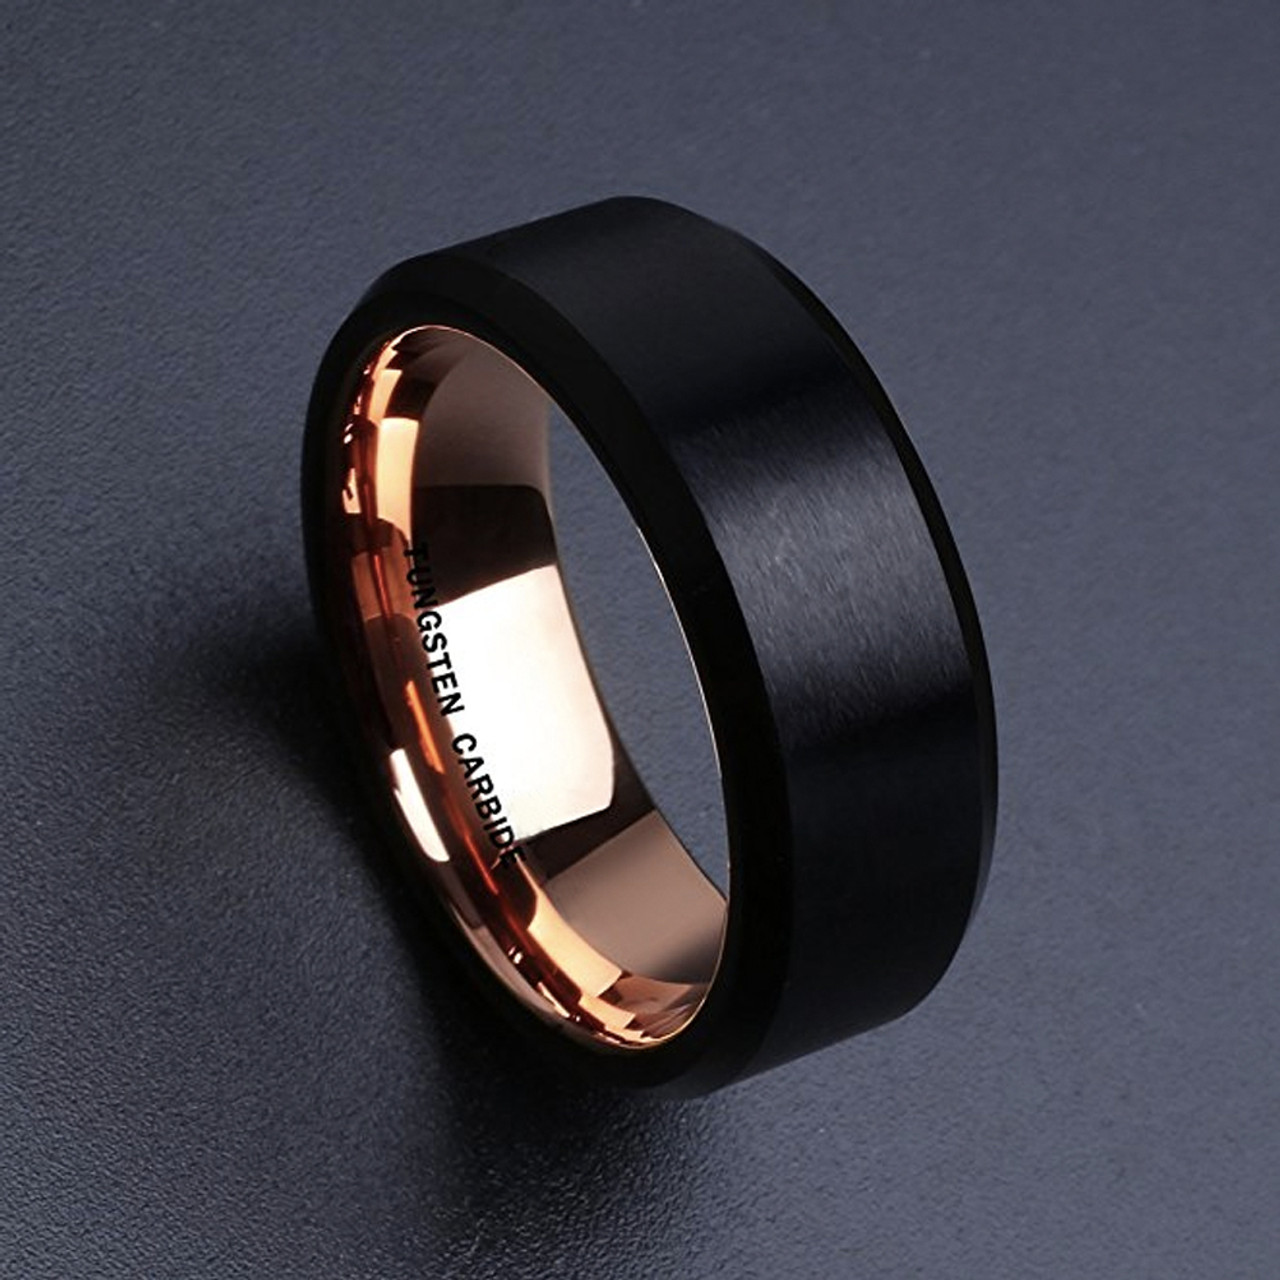 Men's Tungsten Wedding Band (8mm). Black Matte Finish Tungsten Carbide Ring with Inside Rose Gold Beveled Edge. Mens Wedding Bands